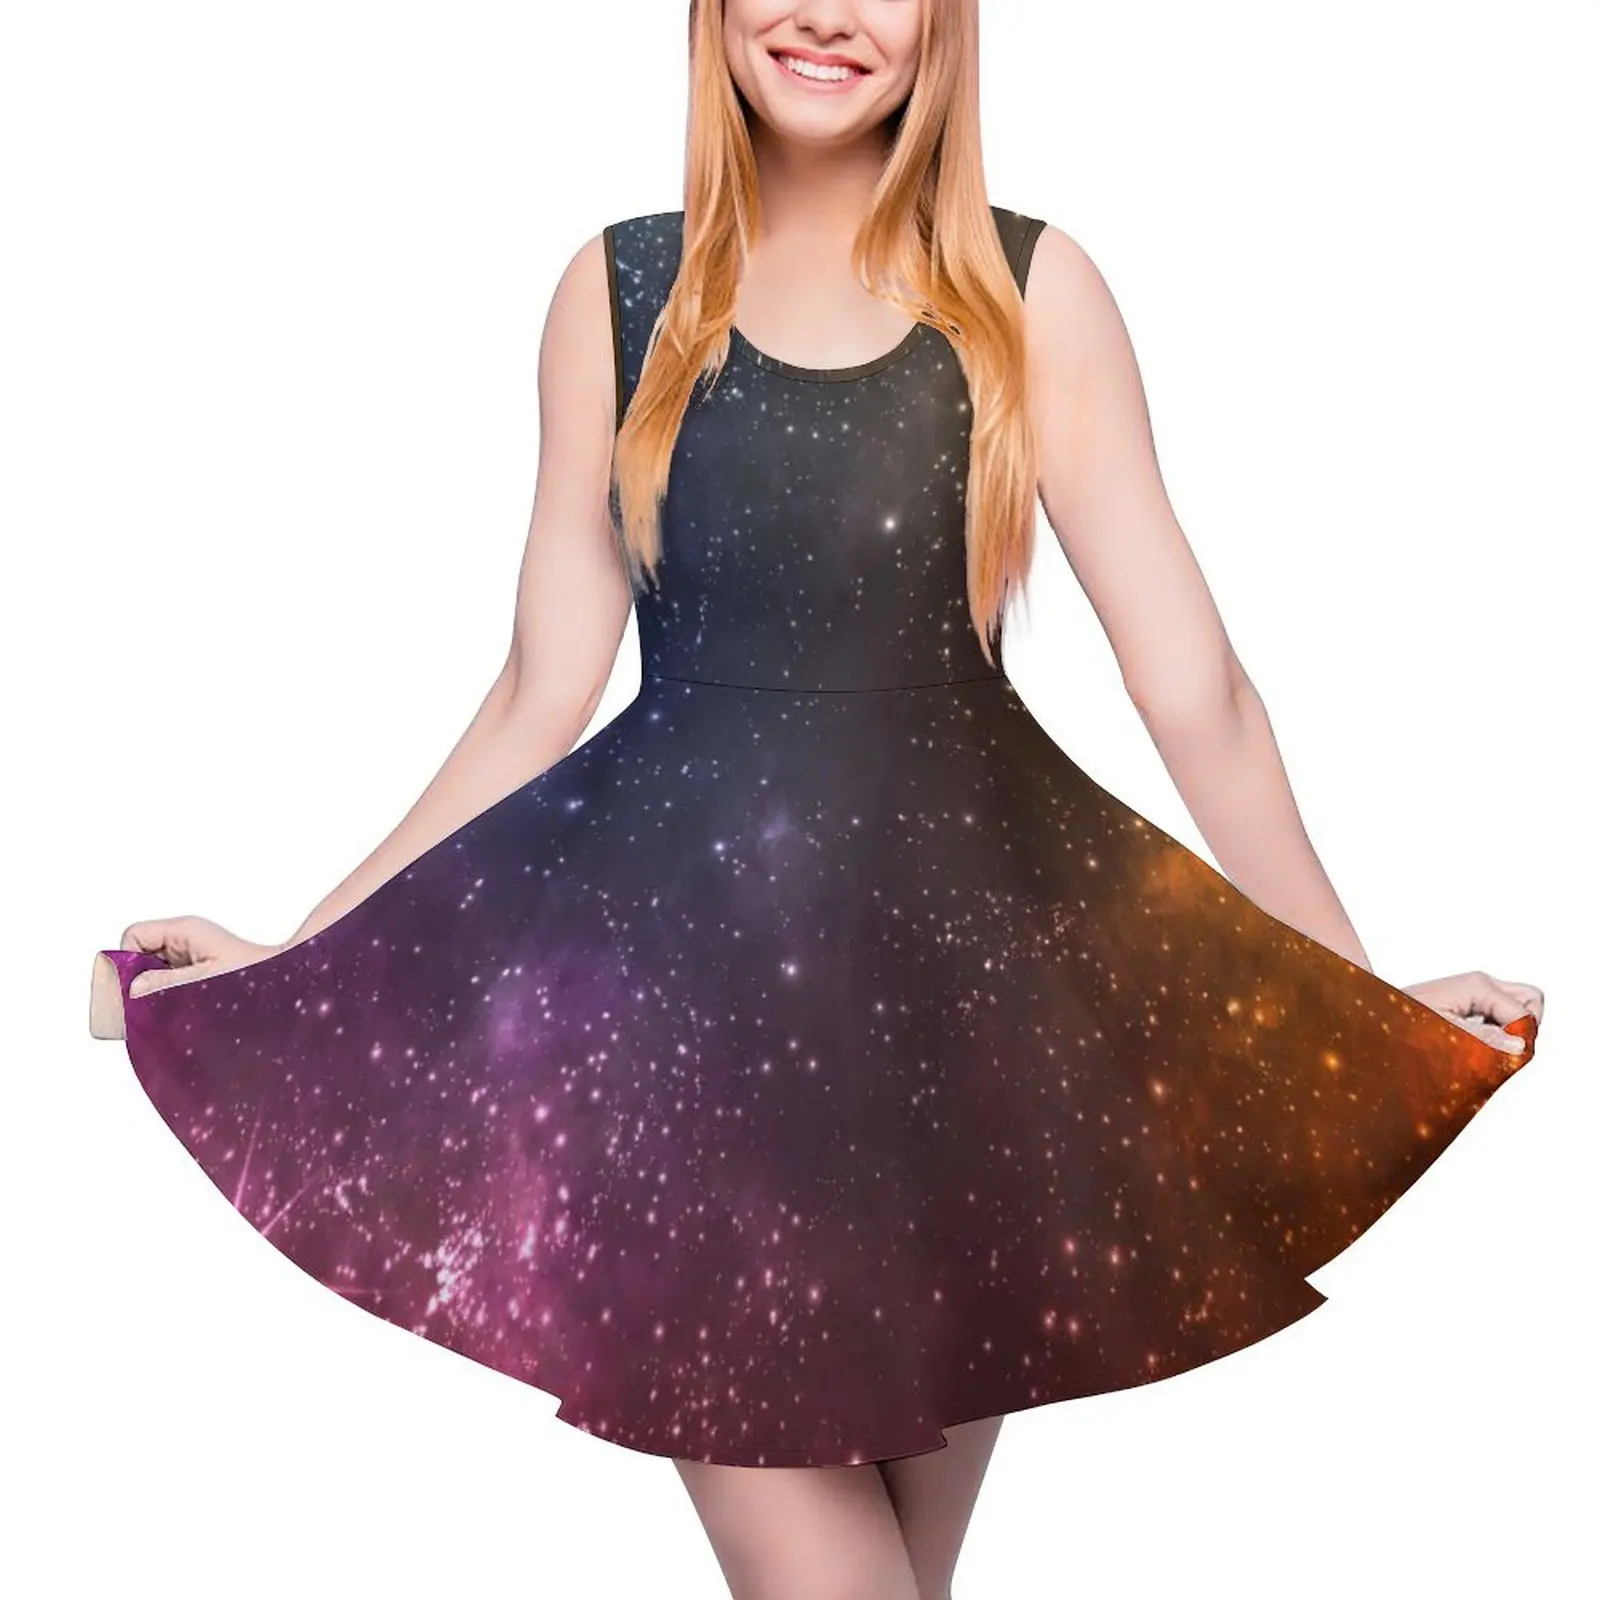 

Colourful Galaxy Dress Nebula And Bright Stars Casual Dresses Woman Modern Skate Dress Summer Printed Clothing Big Size 4XL 5XL